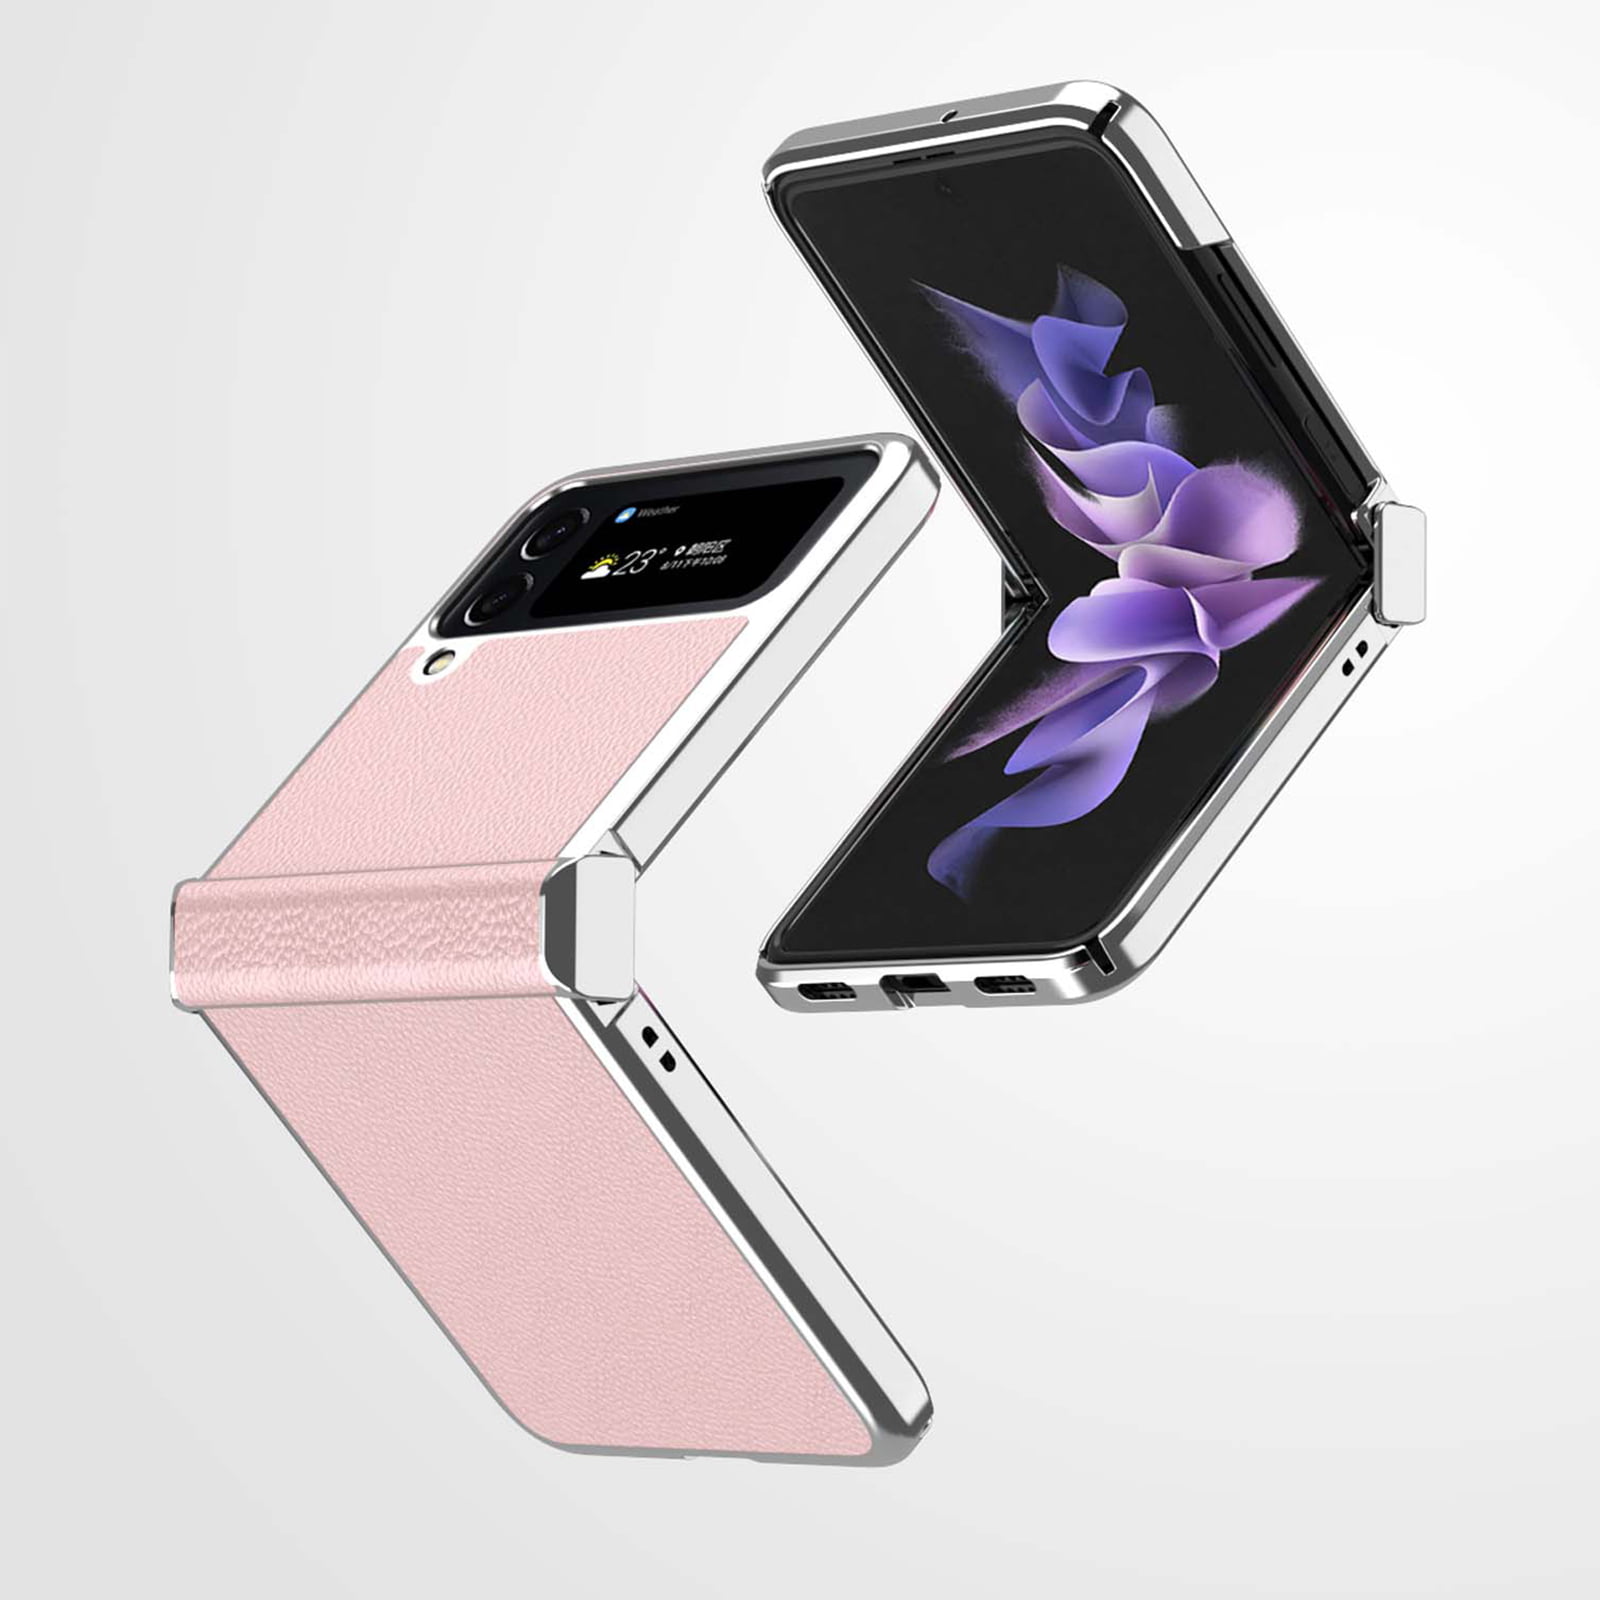  SHIEID Samsung Z Flip 4 Case, Galaxy Z Flip 4 Case with Ring  Protective Cover, Sponge Lining, Diamond Shape Design Flip 4 Case for  Samsung Galaxy Z Flip 4 5G, Black 